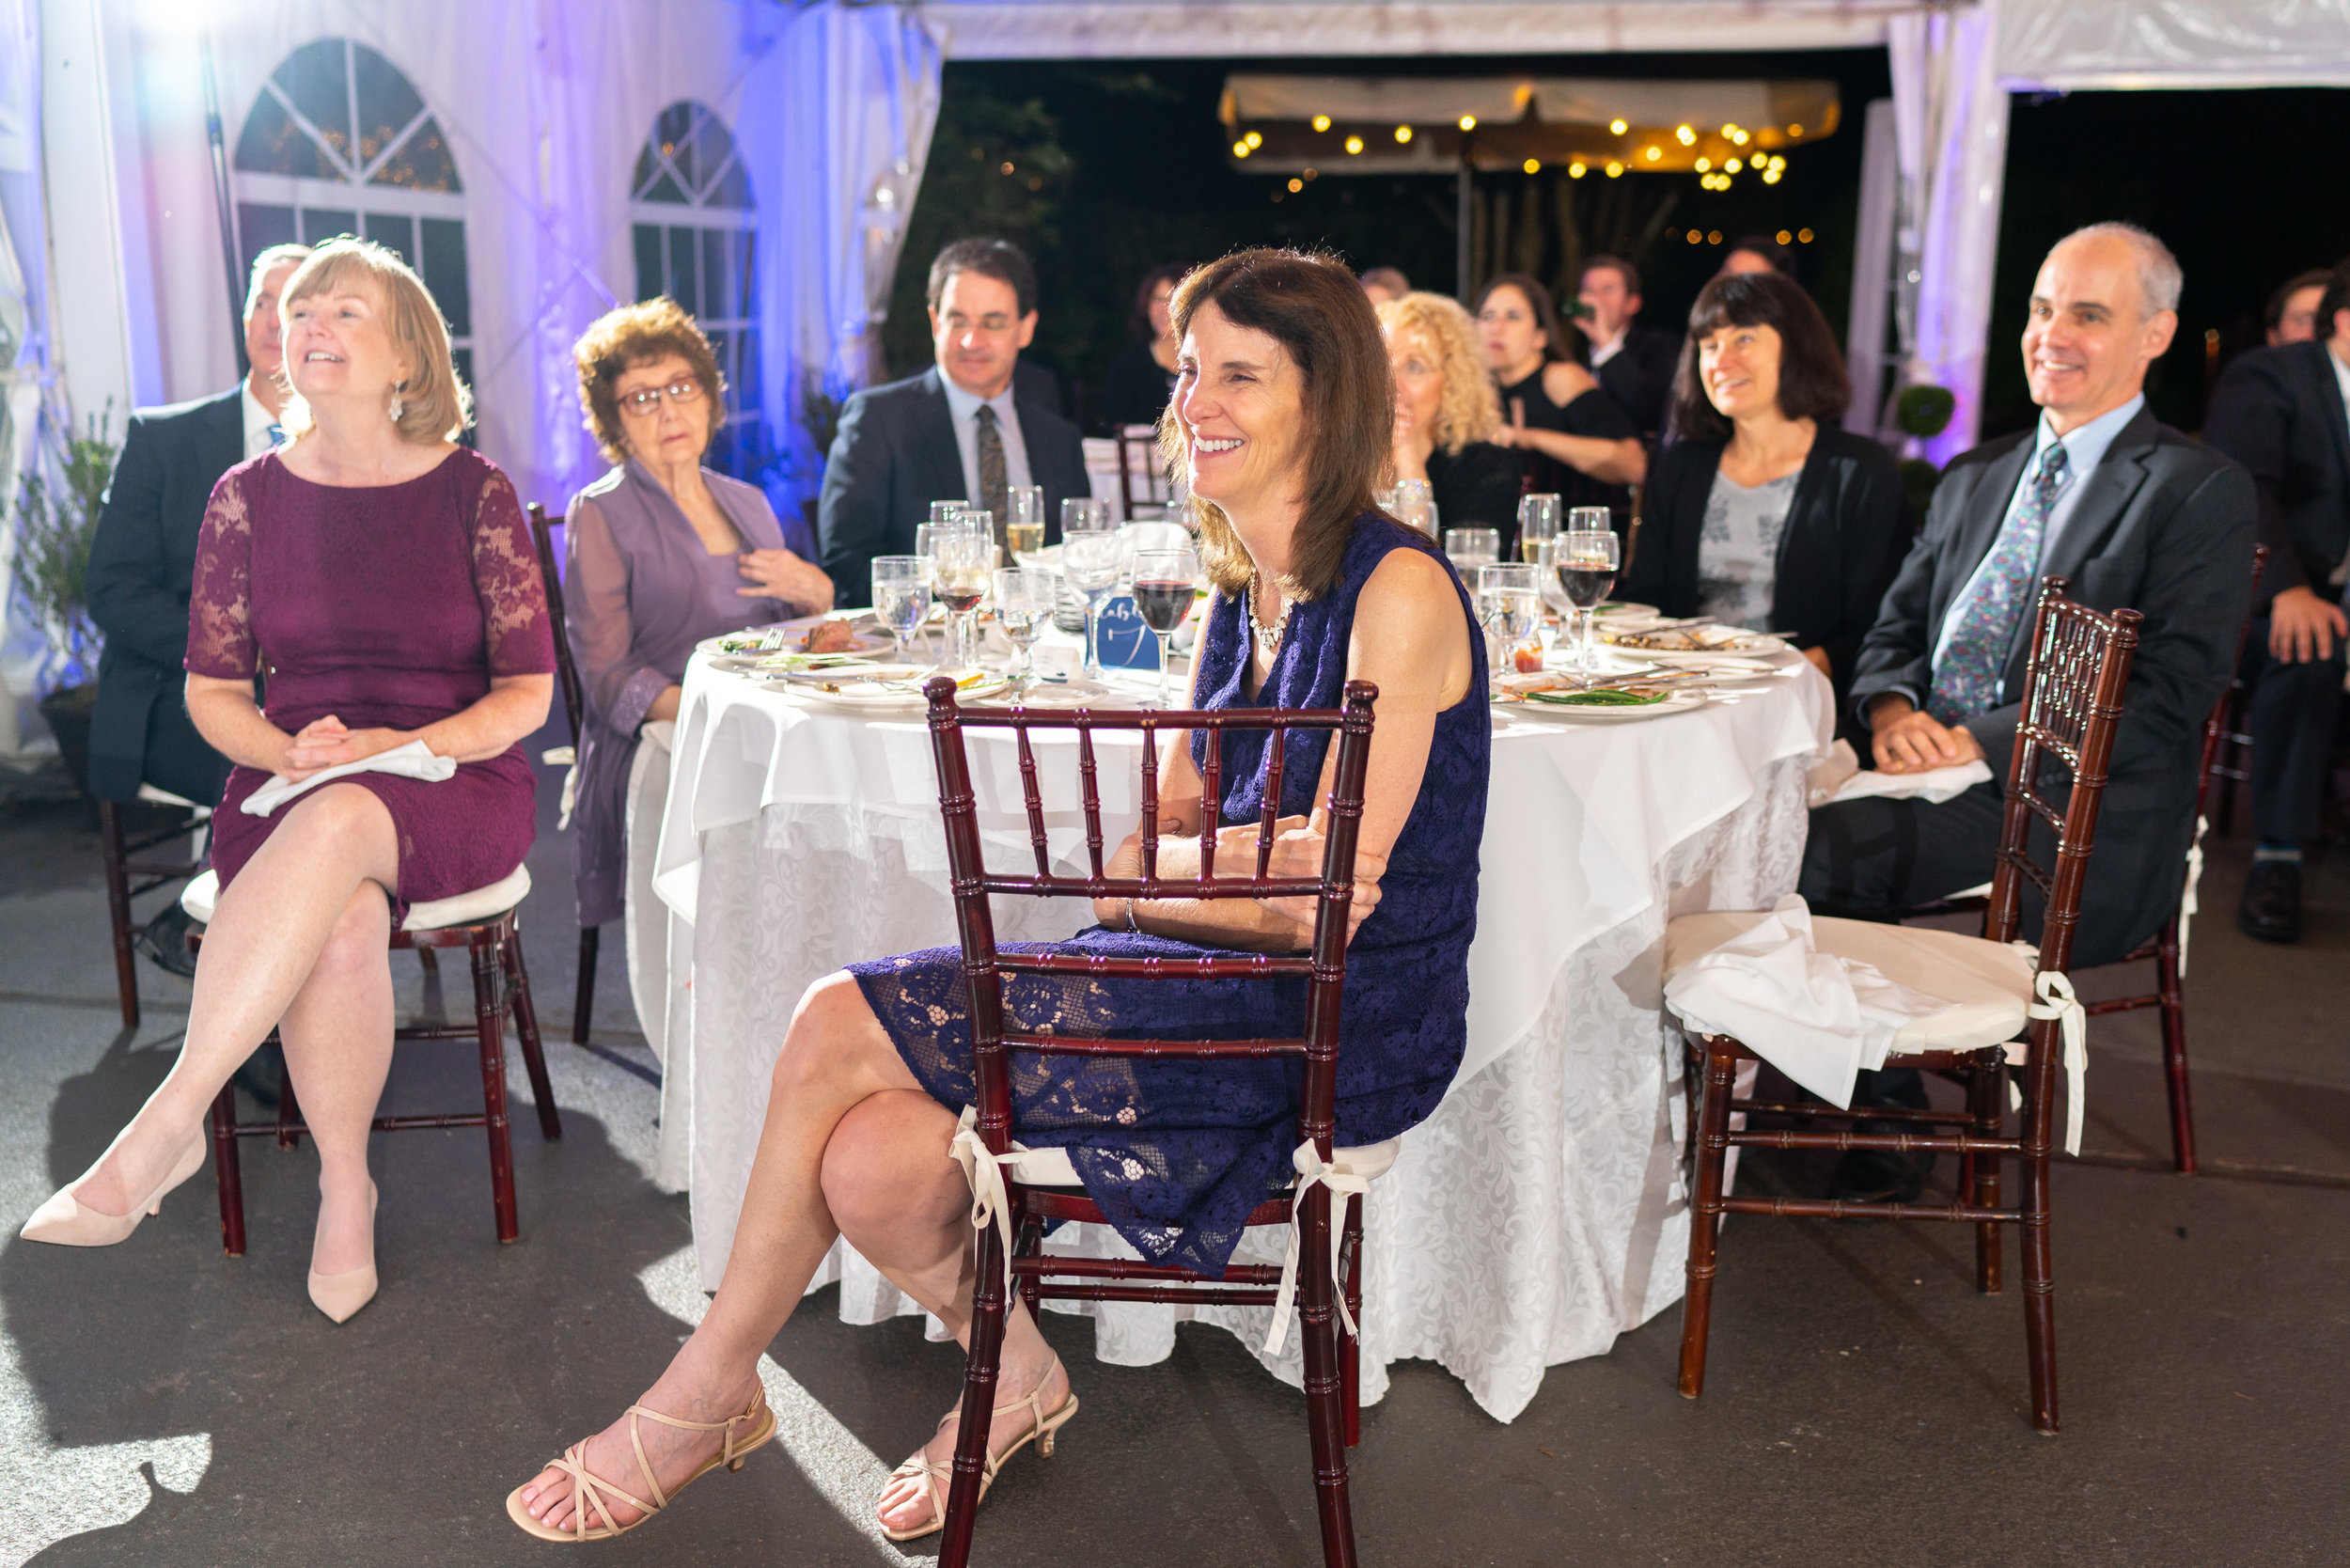 Parents listening to the toasts at wedding reception at Elkridge Furnace Inn